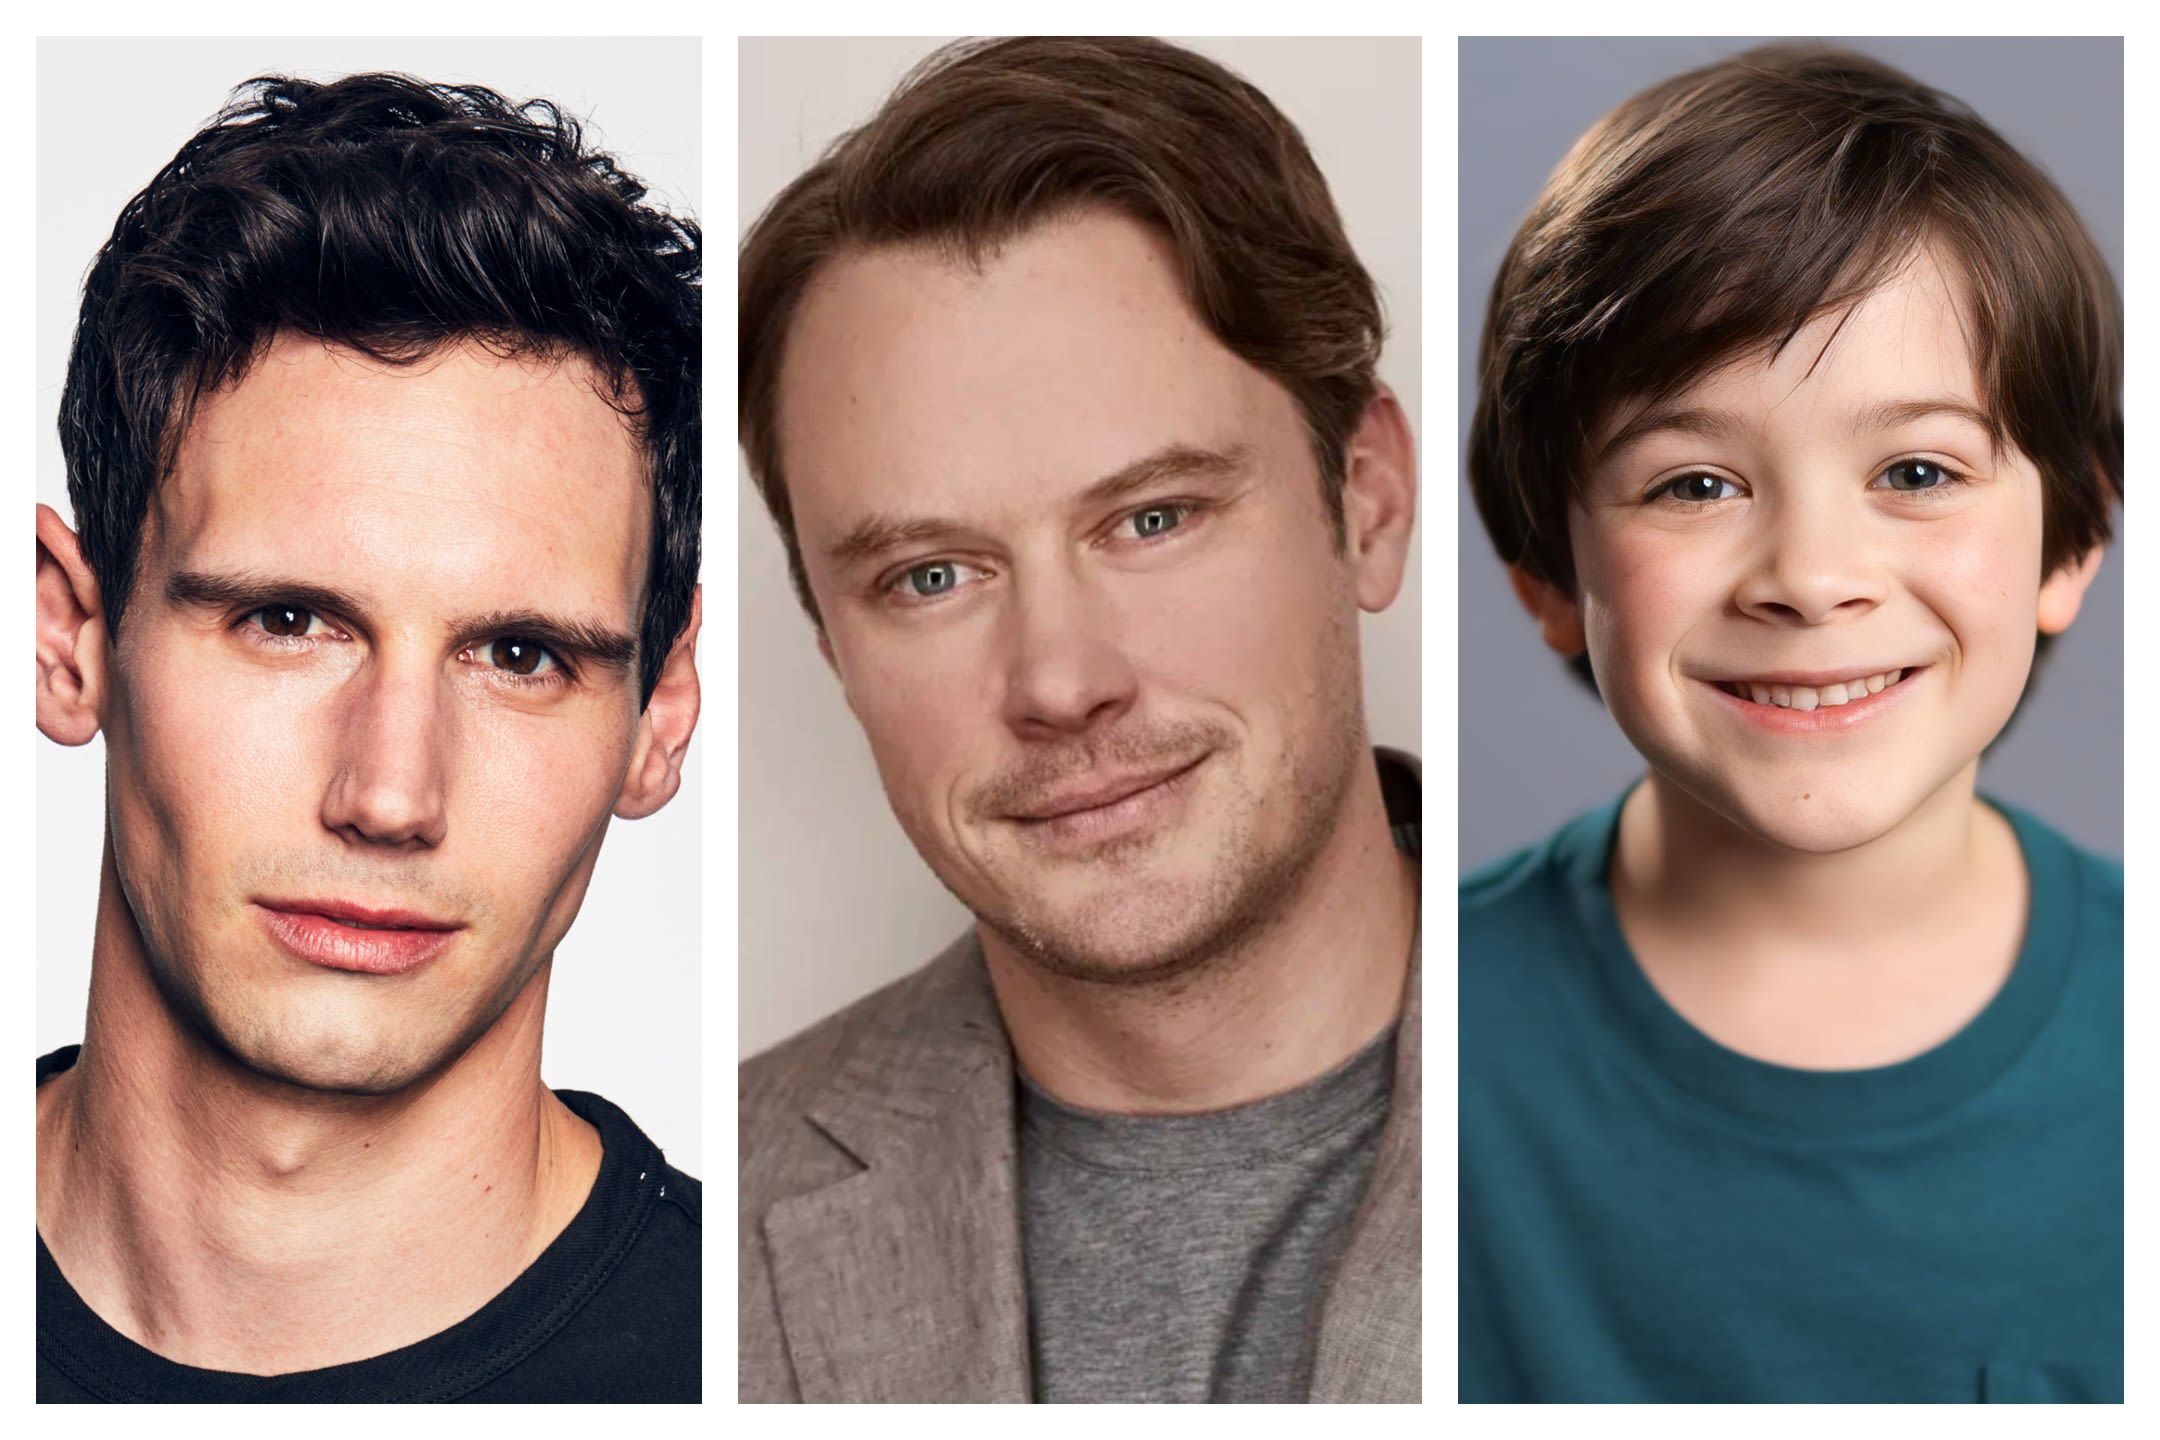 Amazon Horror Comedy Pilot ‘Nightbeast’ Casts Cory Michael Smith, Michael Dorman, Miles Marthaller (EXCLUSIVE)